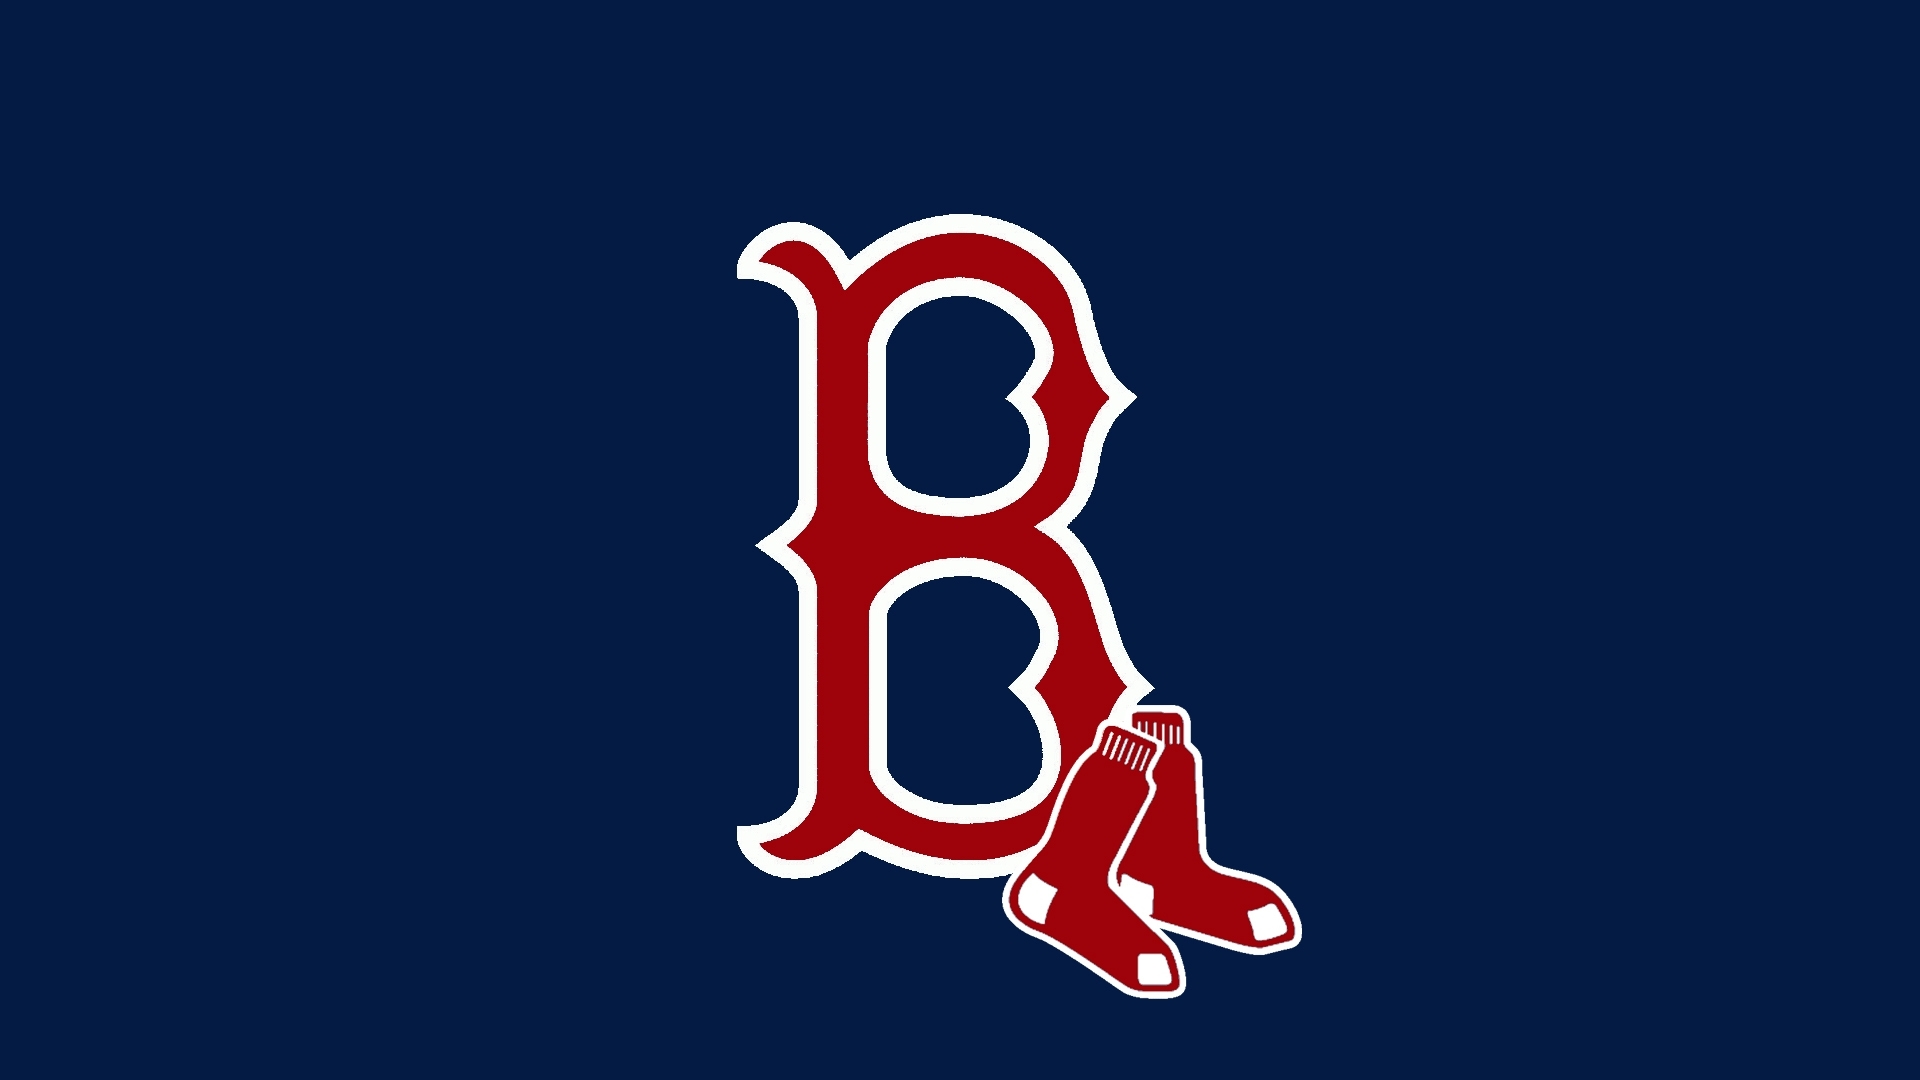 Boston Red Soxs